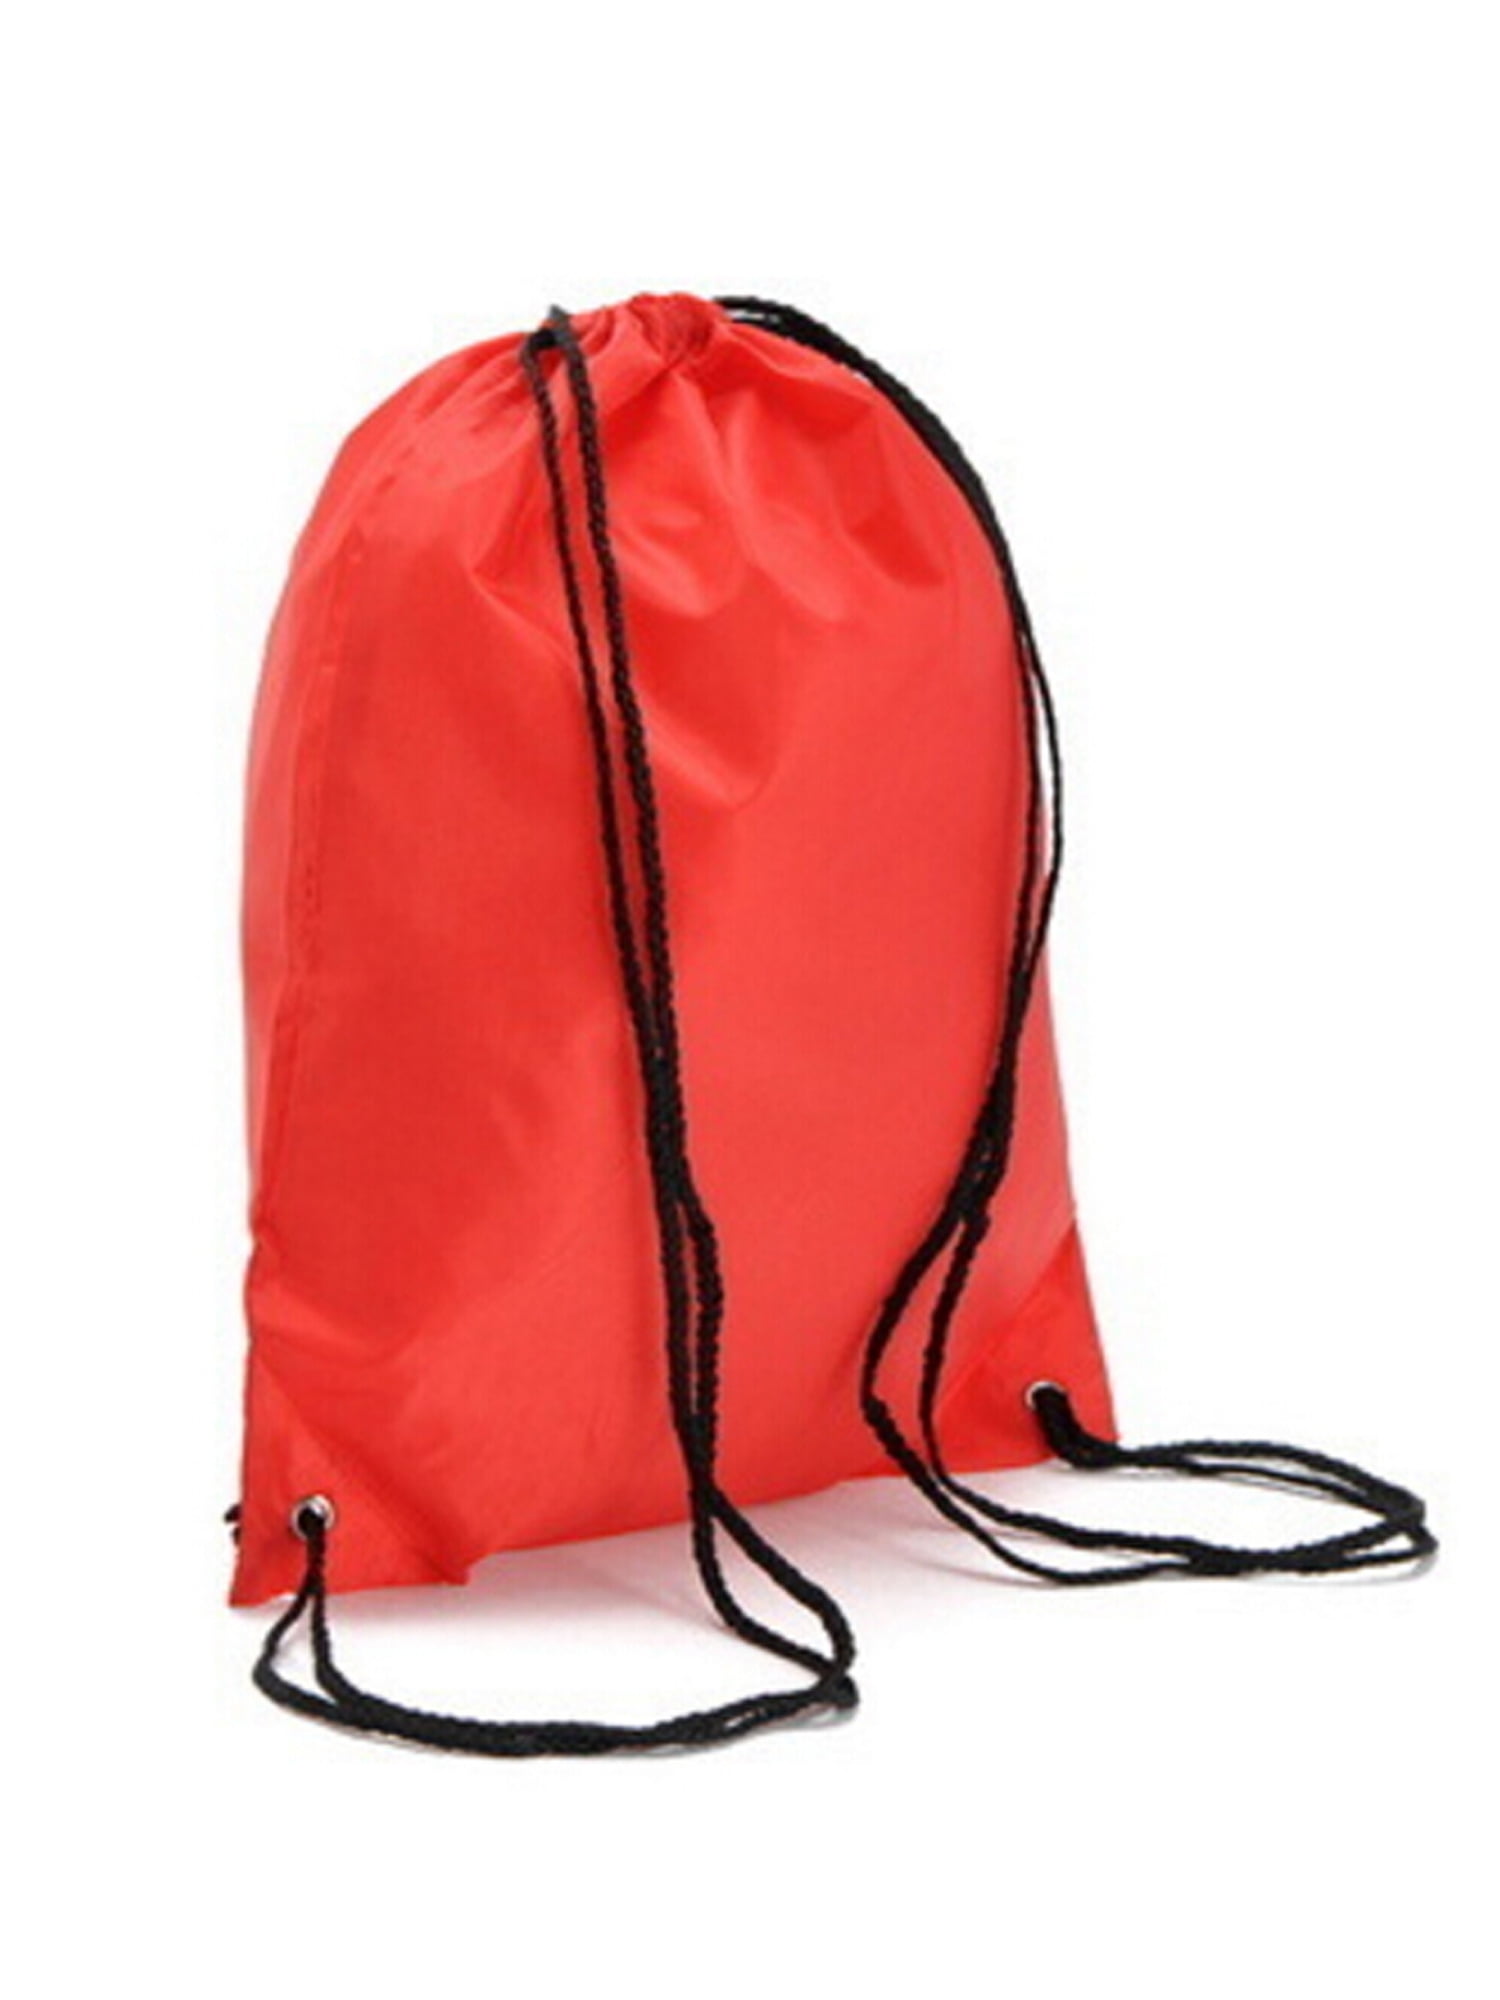 Nylon Drawstring Backpack String Gym Sack Bag Sports Cinch Sack for kids RED 